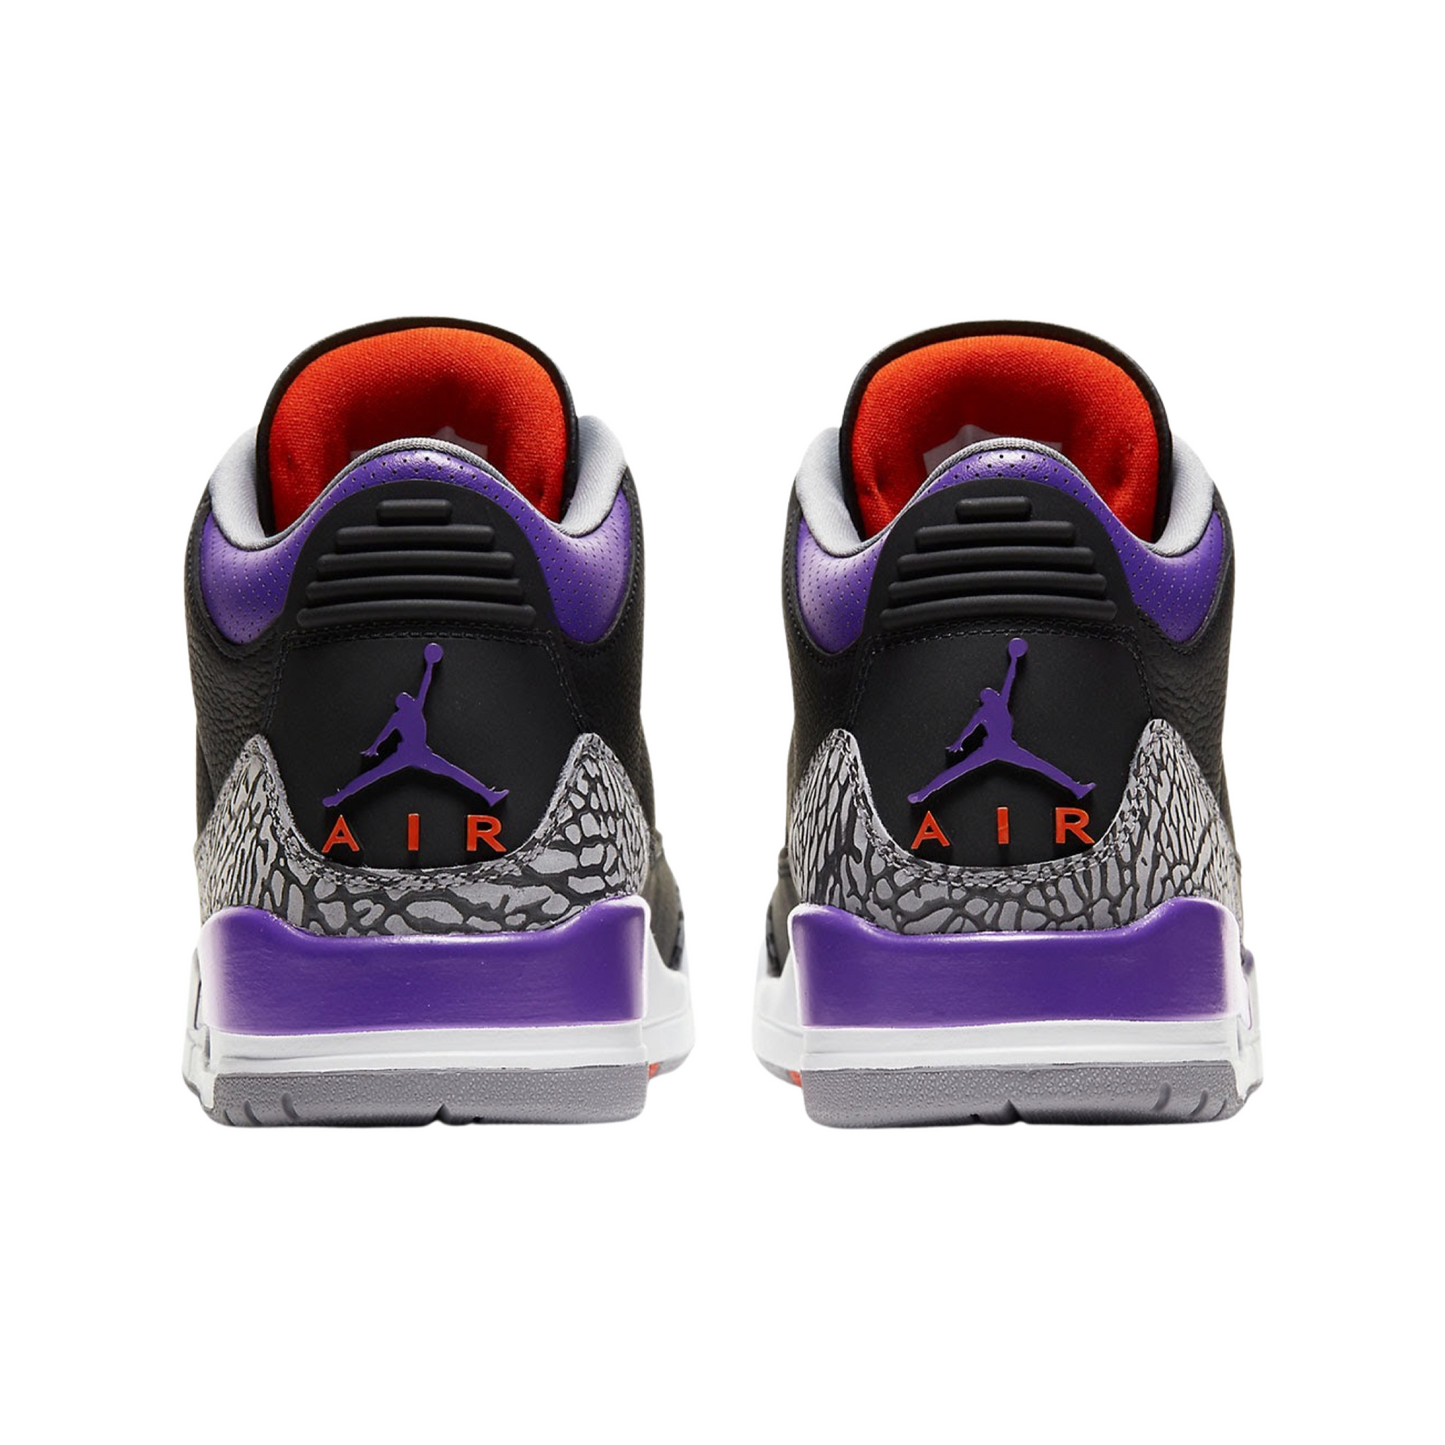 Air Jordan 3 Retro Black Court Purple Cement